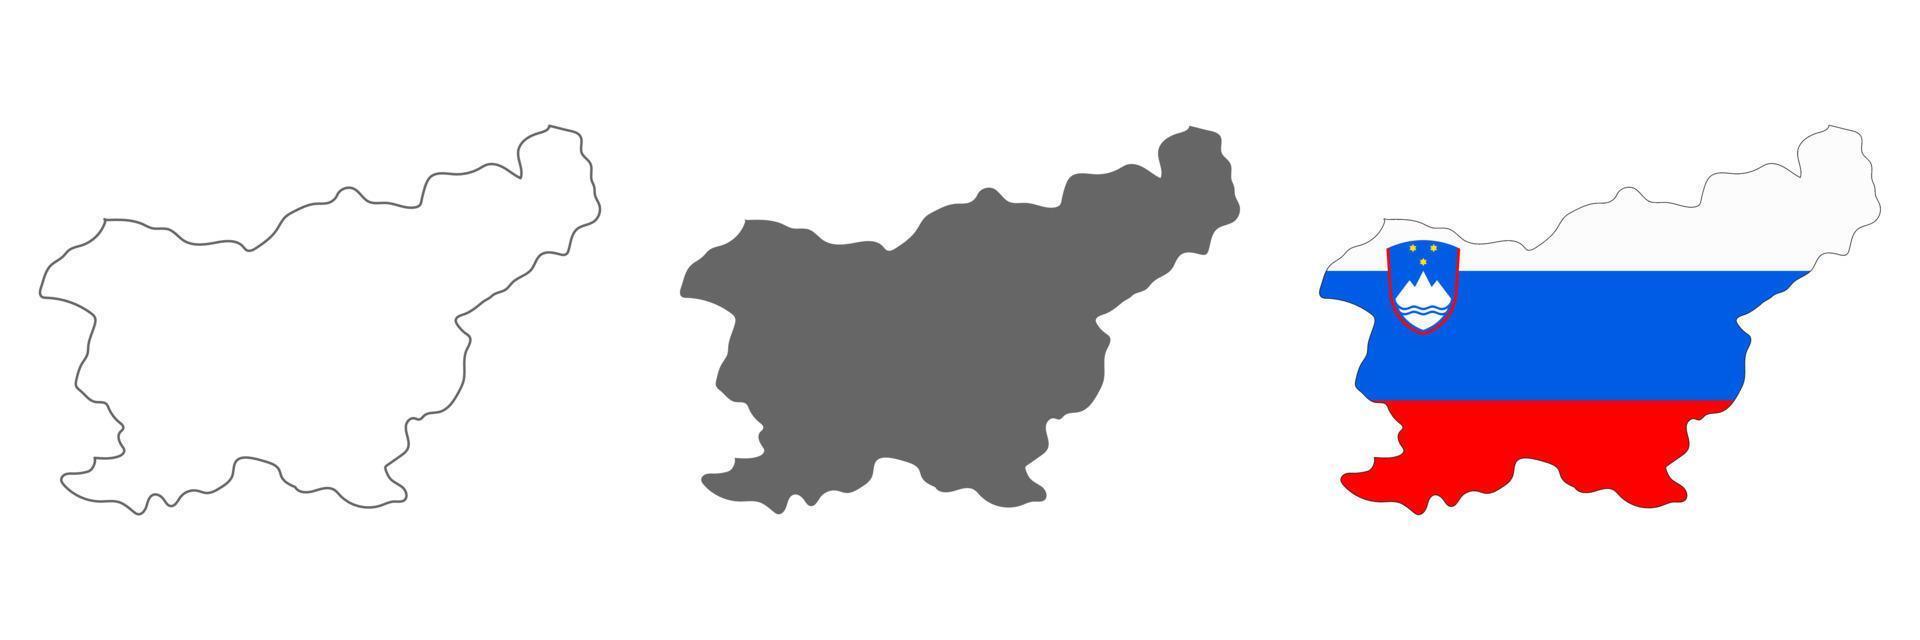 Mapa de Eslovenia muy detallado con bordes aislados en segundo plano. vector